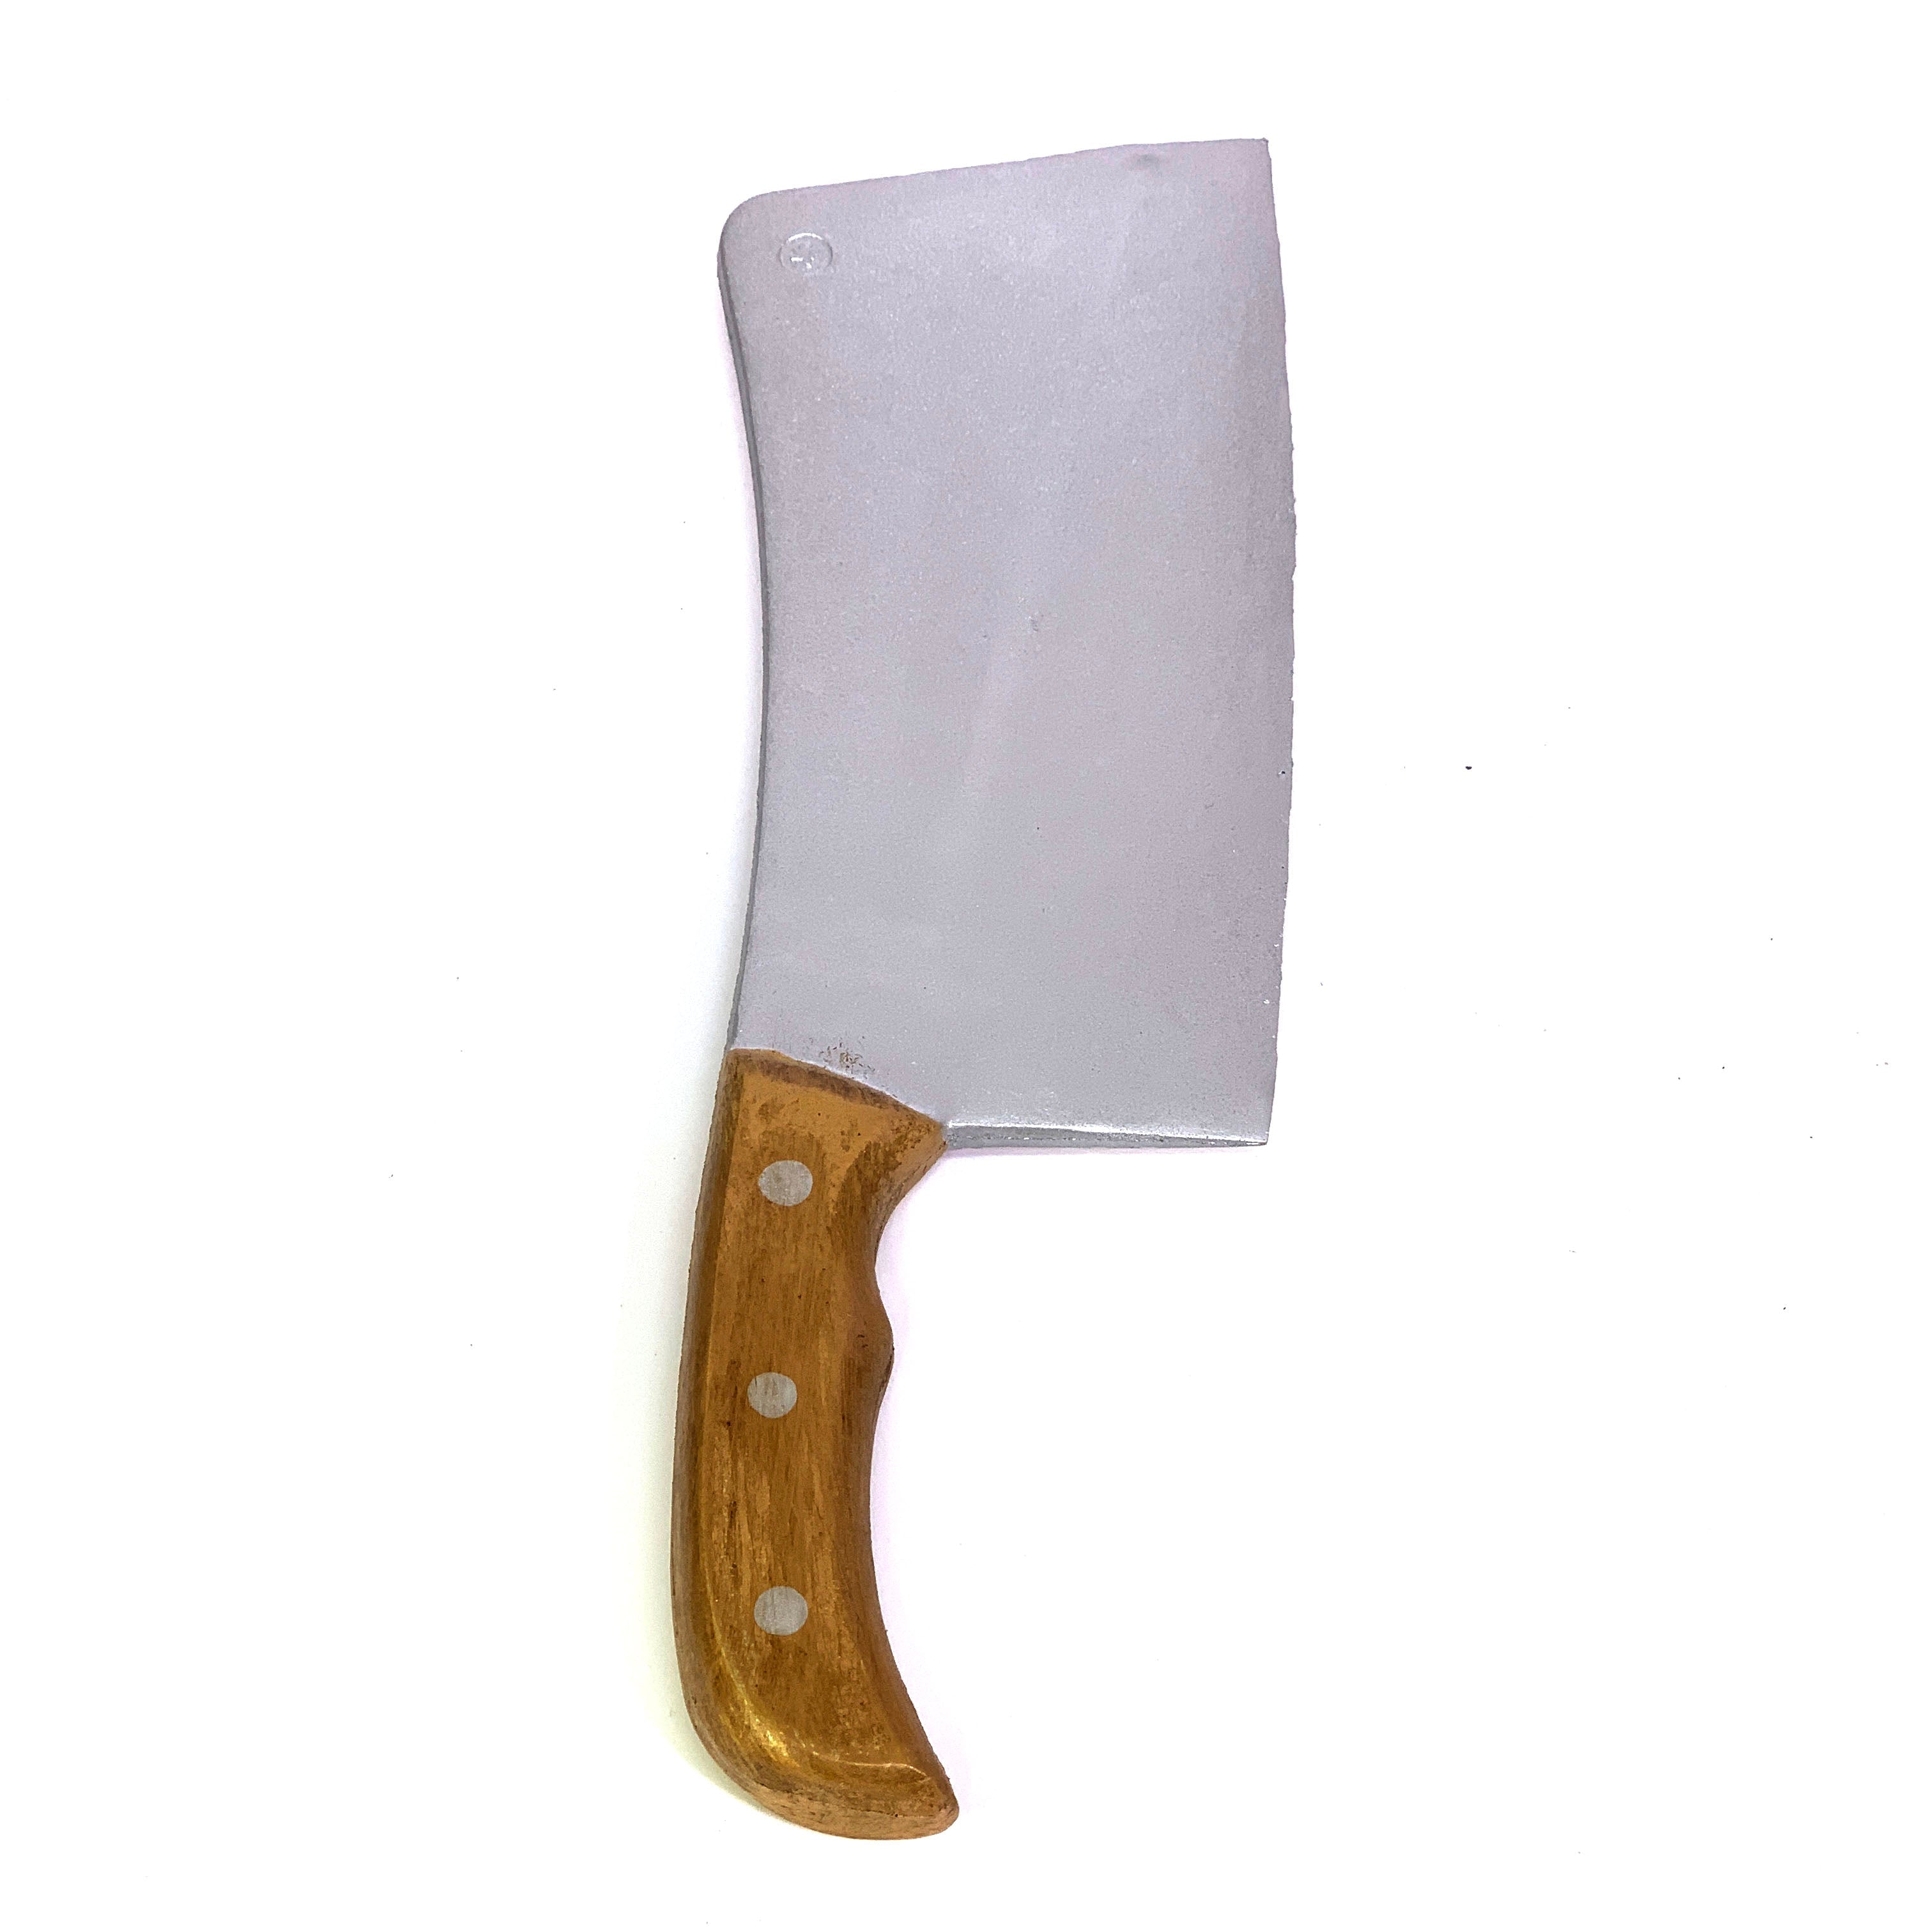 XL Butcher Knife Foam Rubber Prop Brown Handle